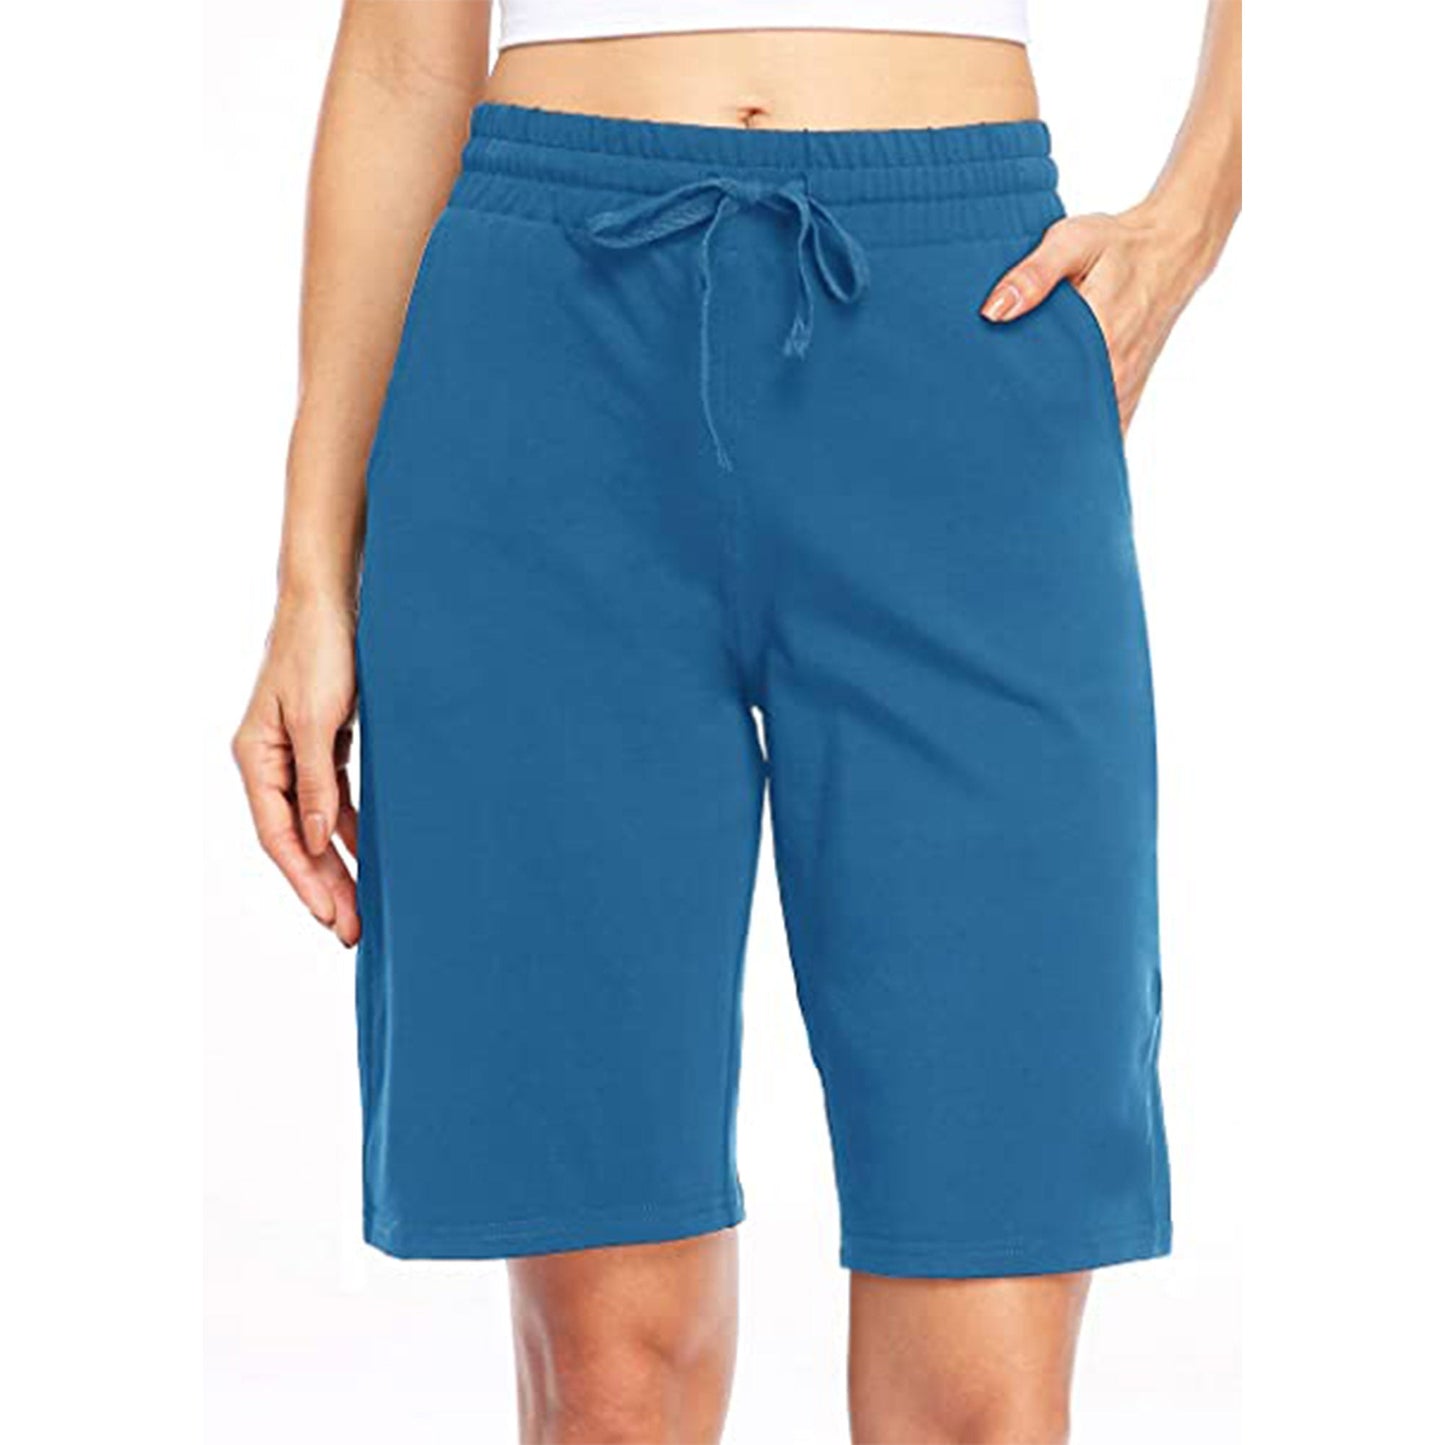 Azlax Womens Shorts Blue